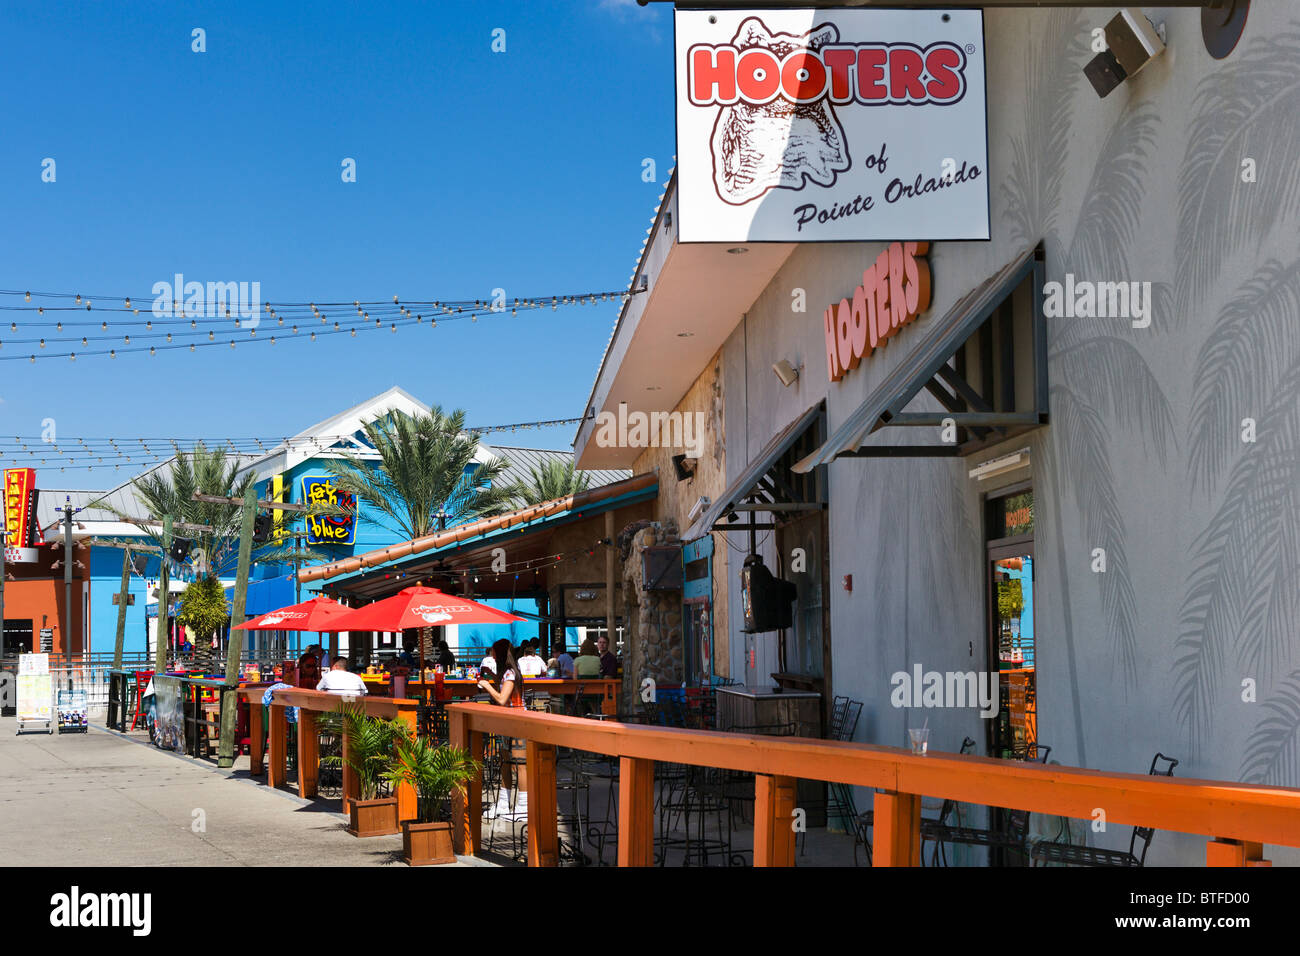 Hooters restaurant and bar, Pointe Orlando, International Drive, Orlando, Central Florida, USA Stock Photo